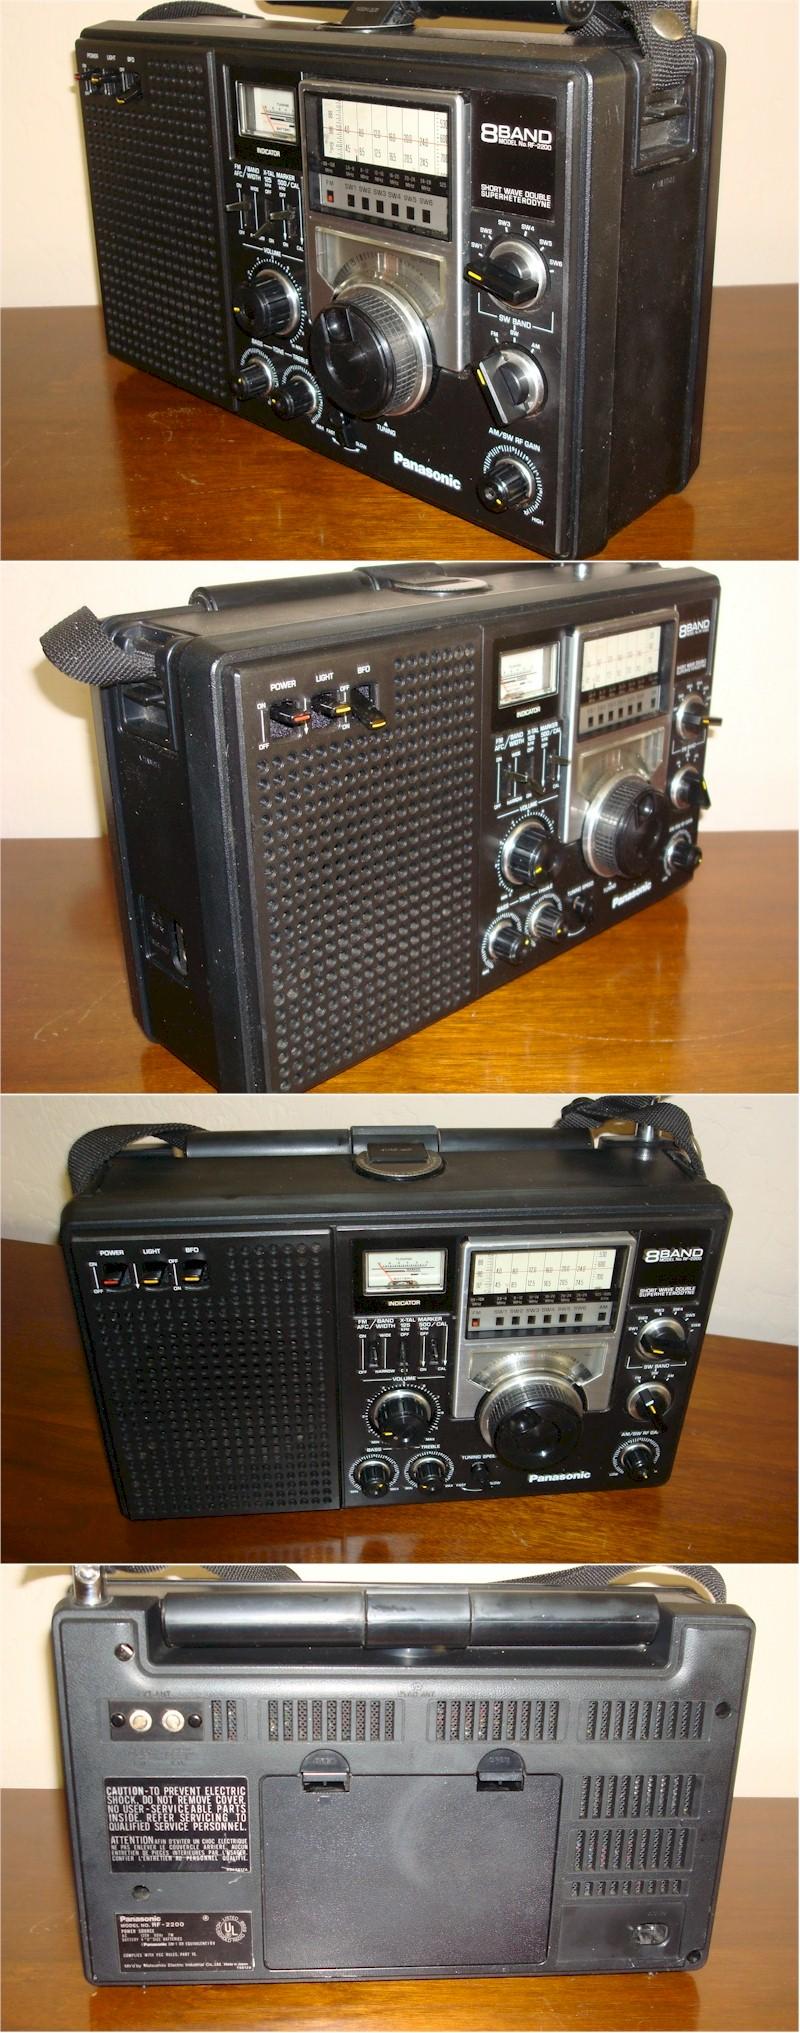 Panasonic RF-2200 Multi-Band Portable